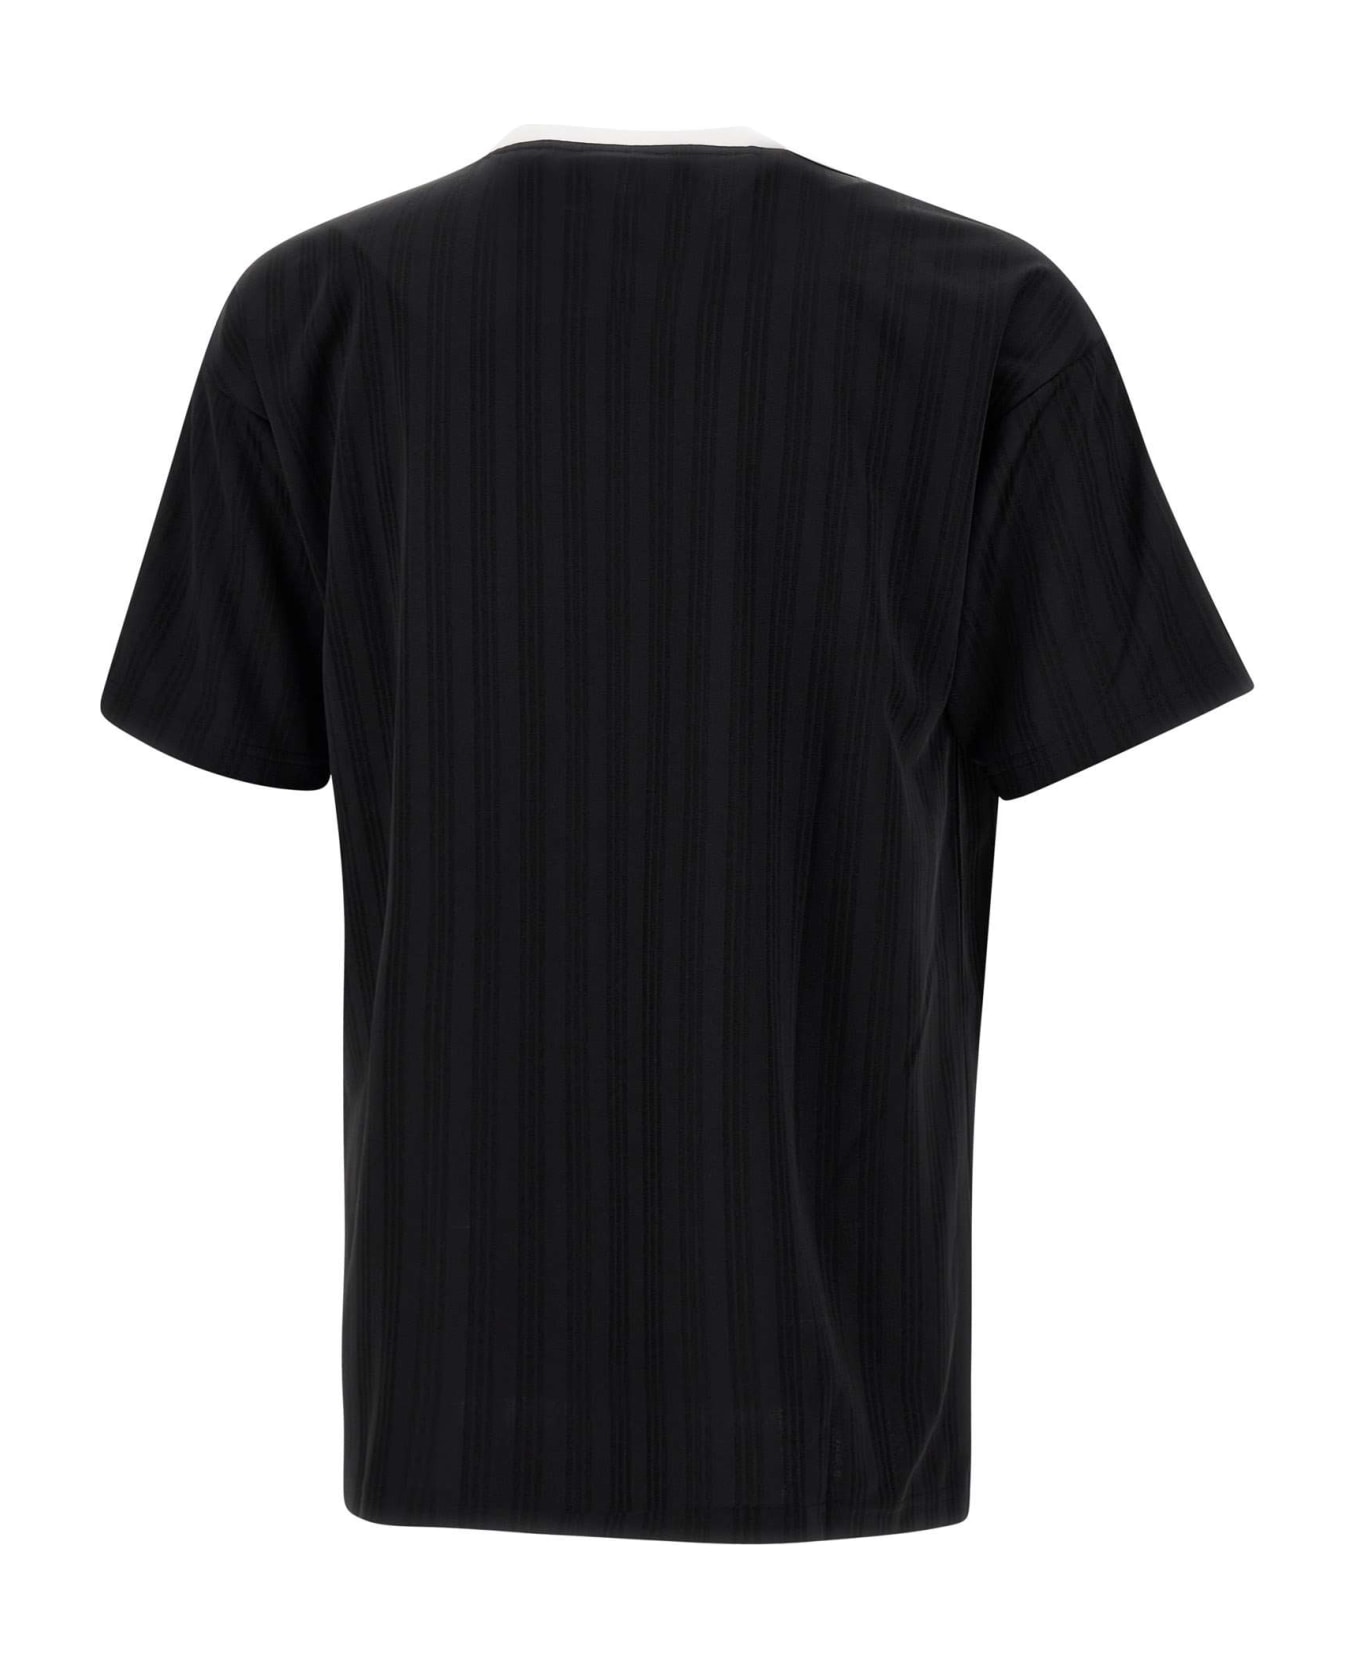 Adidas "adicolor" T-shirt - BLACK